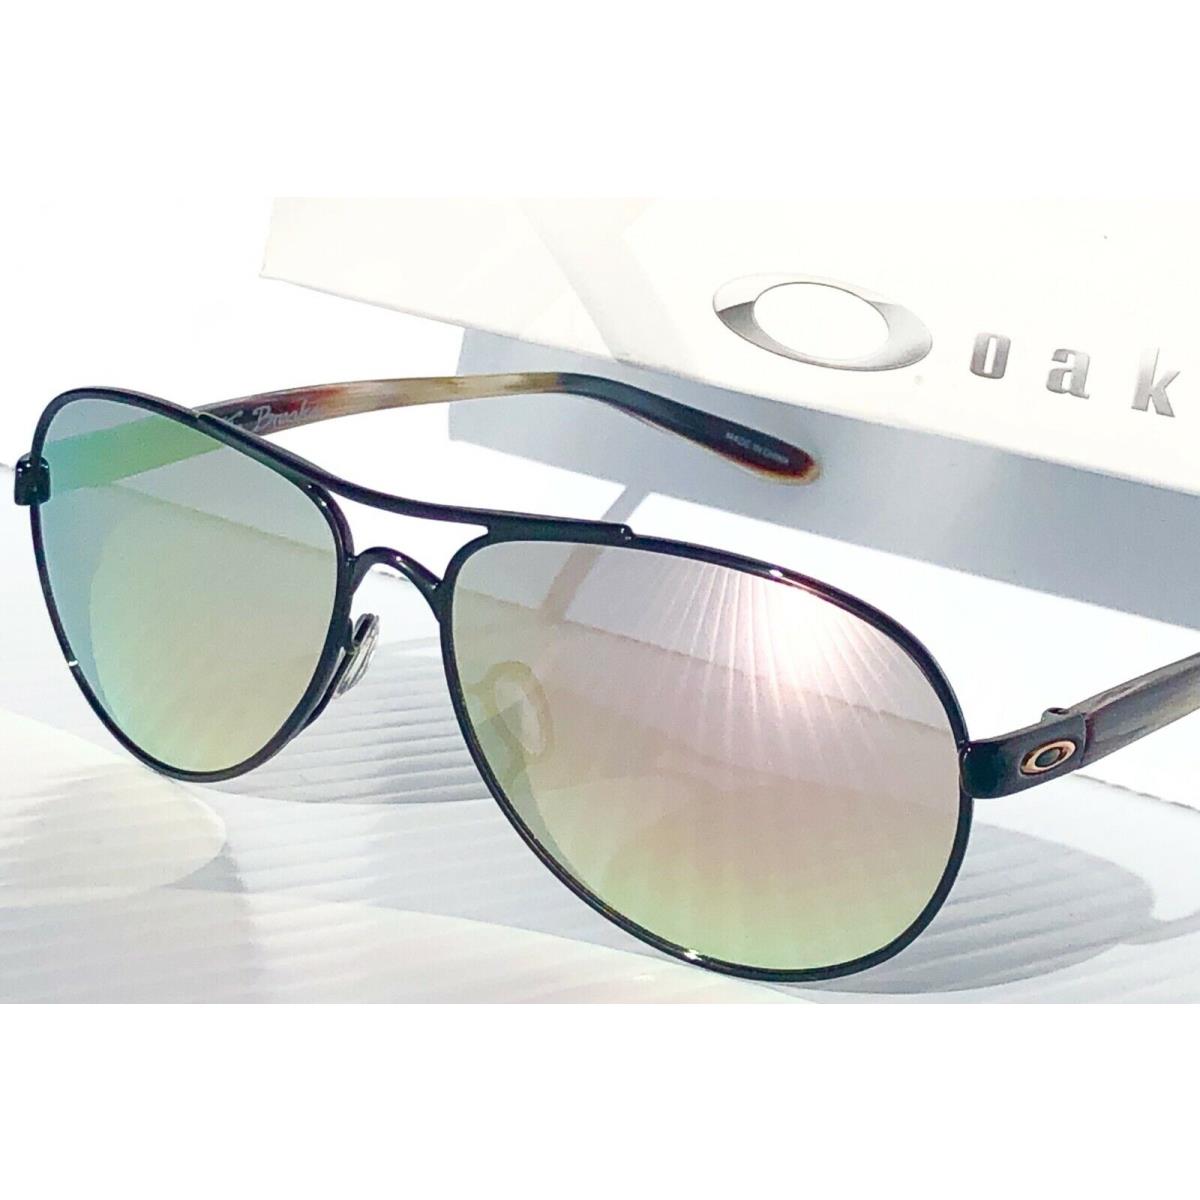 Oakley sunglasses Tie Breaker - Pink , Multicolor Frame, Pink Lens 6